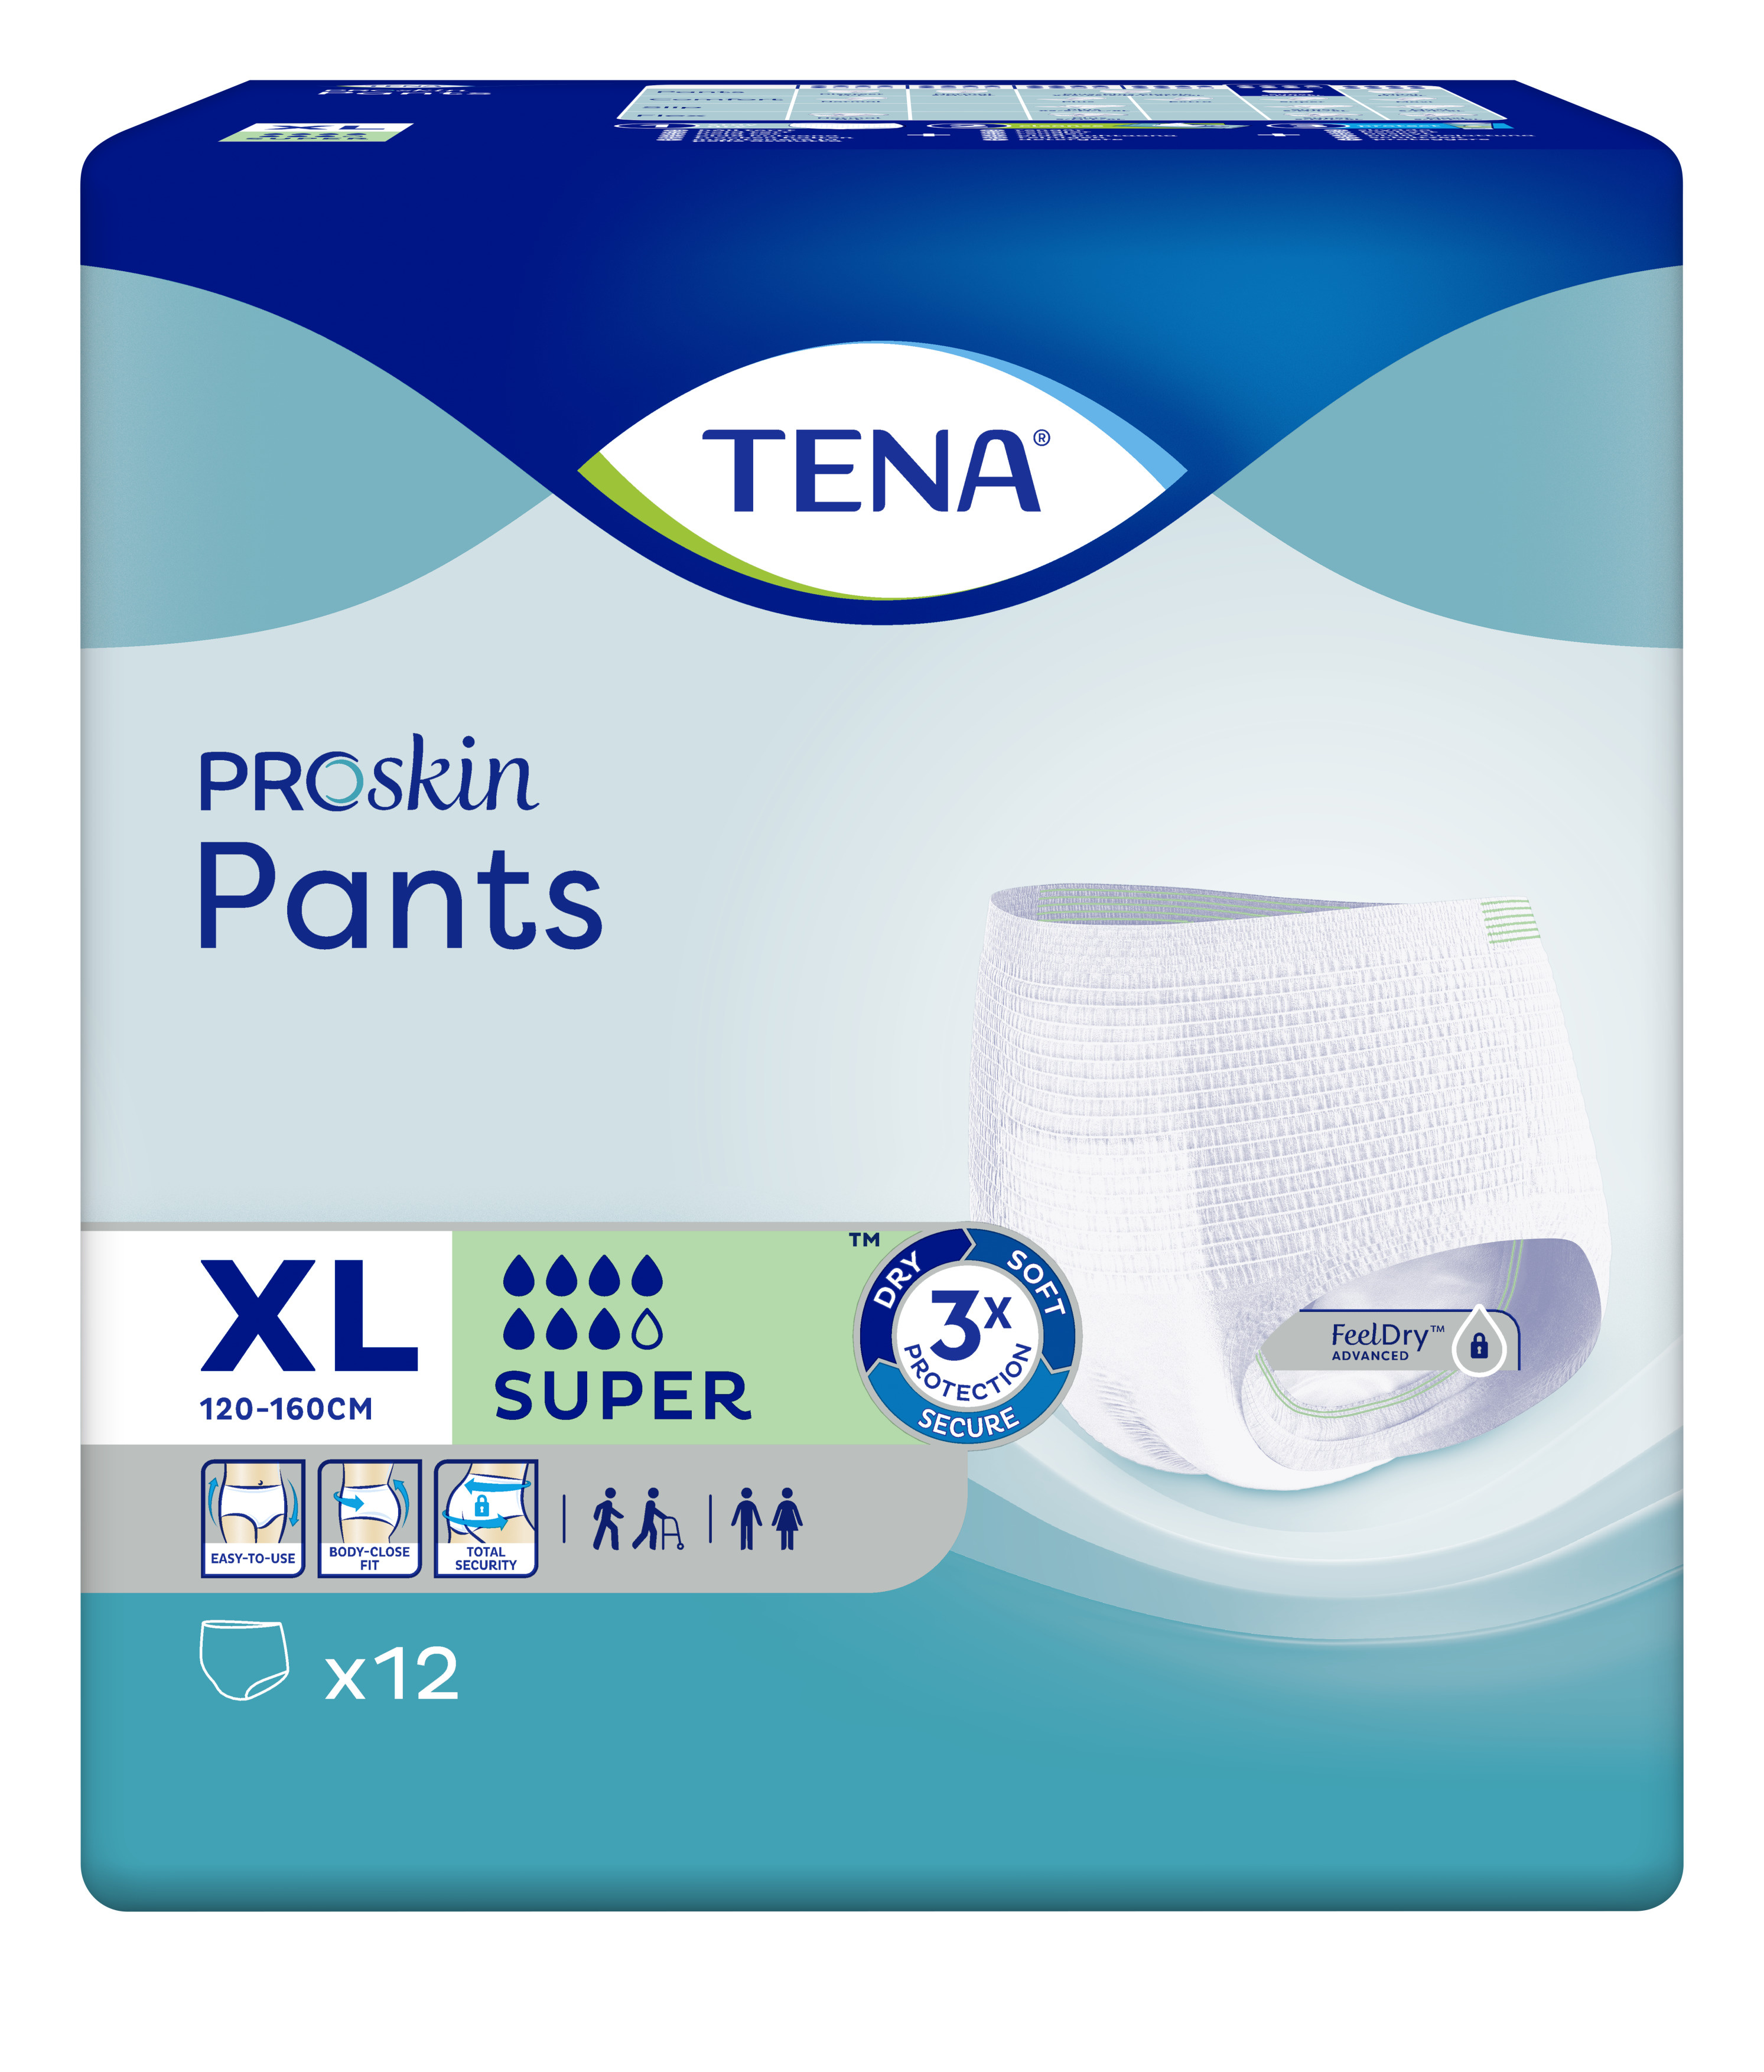 TENA PROskin Pants Super Extra Large image 0